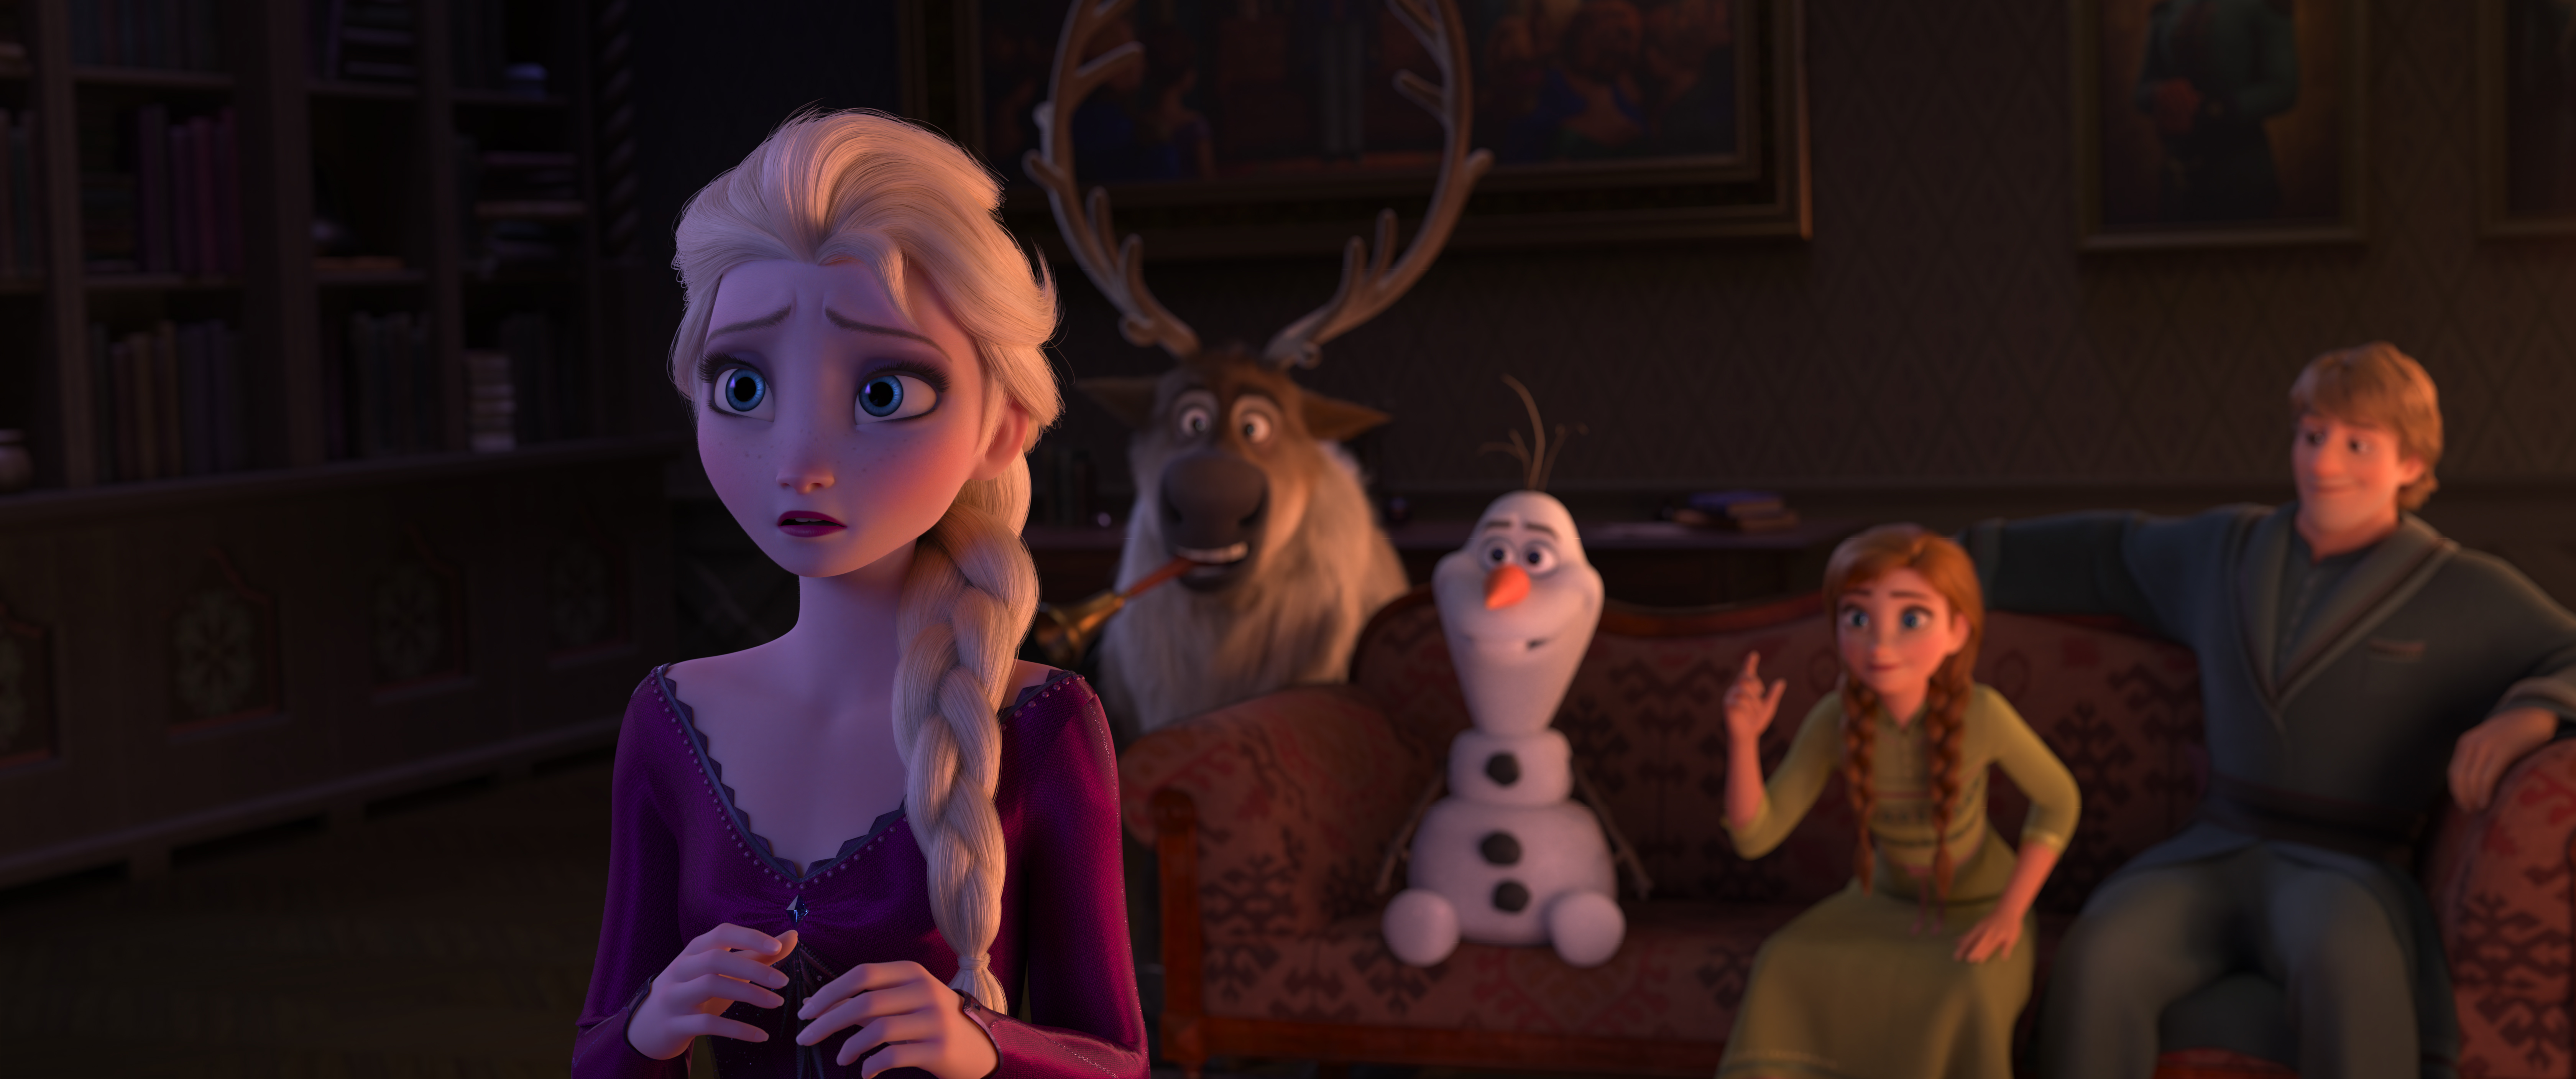 Anna Frozen Elsa Frozen Kristoff Frozen Olaf Frozen Sven Frozen 6720x2814